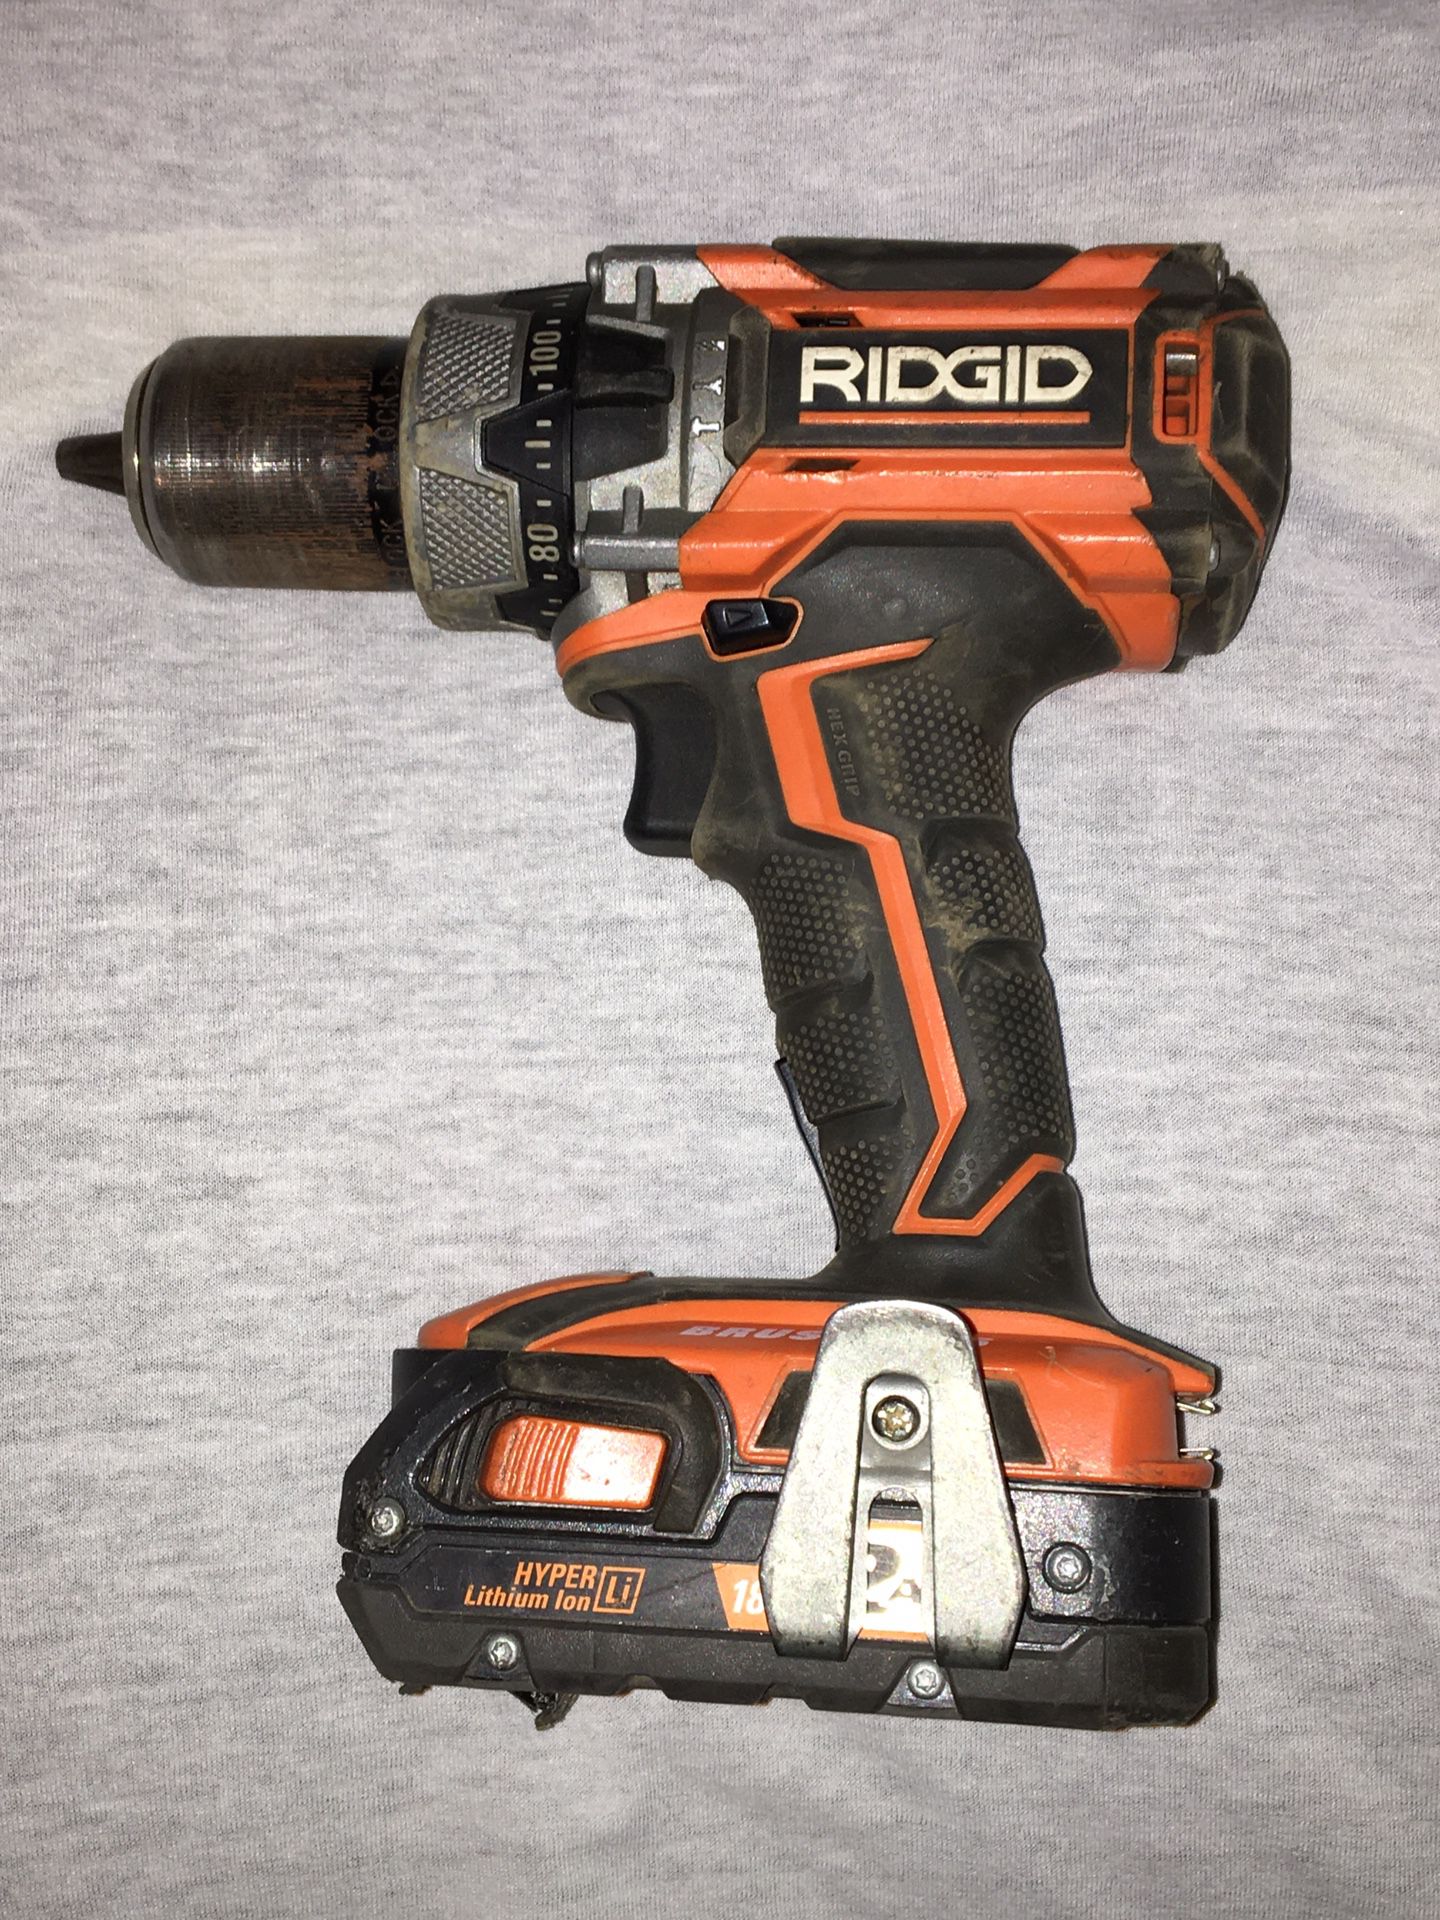 Ridgid R86116 hammer drill/driver Brushless 18V cordless tool only 